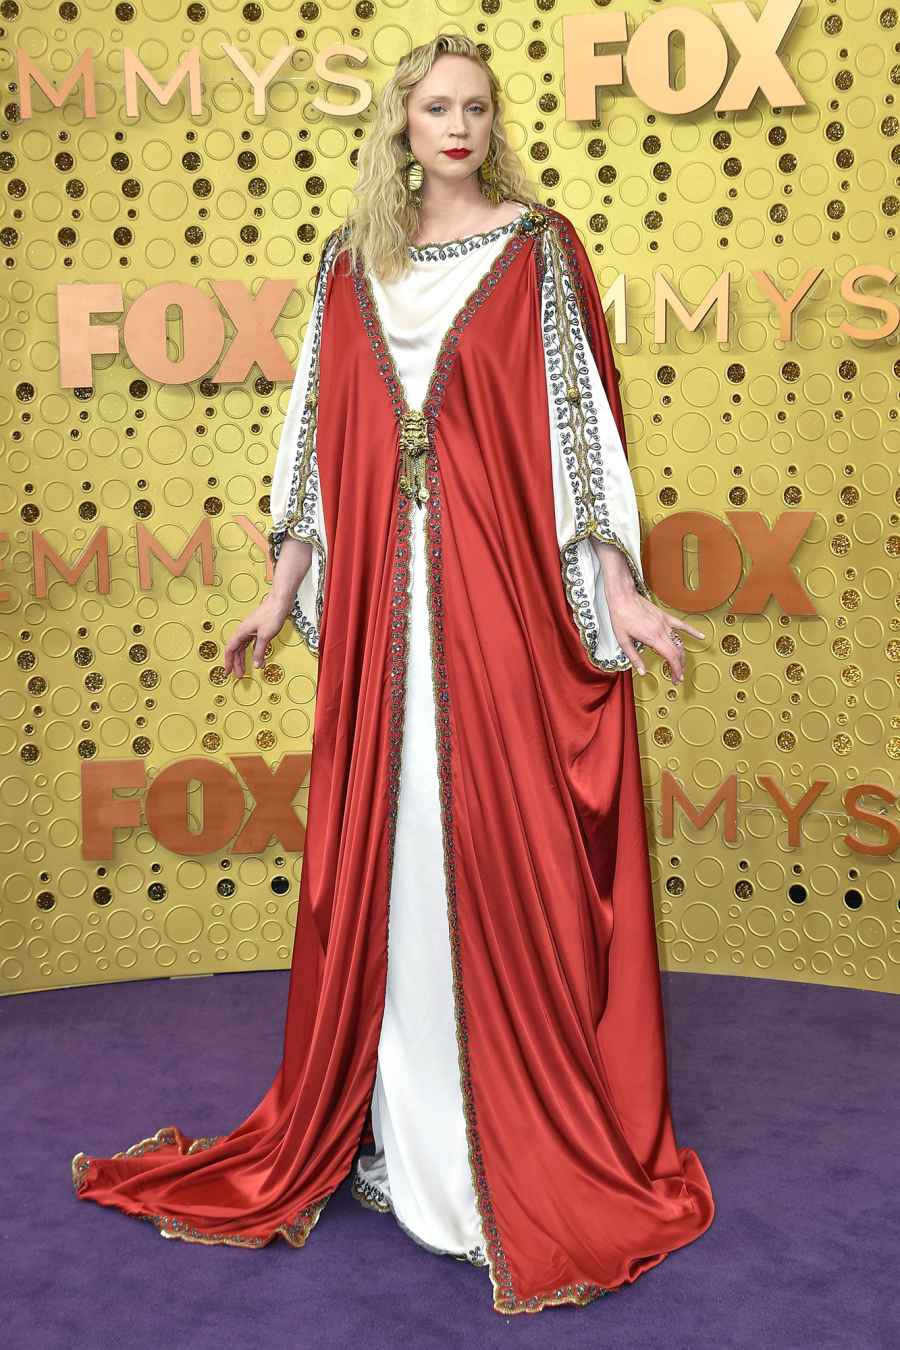 Gwendoline Christie Most Googled Red Carpet Looks of 2019